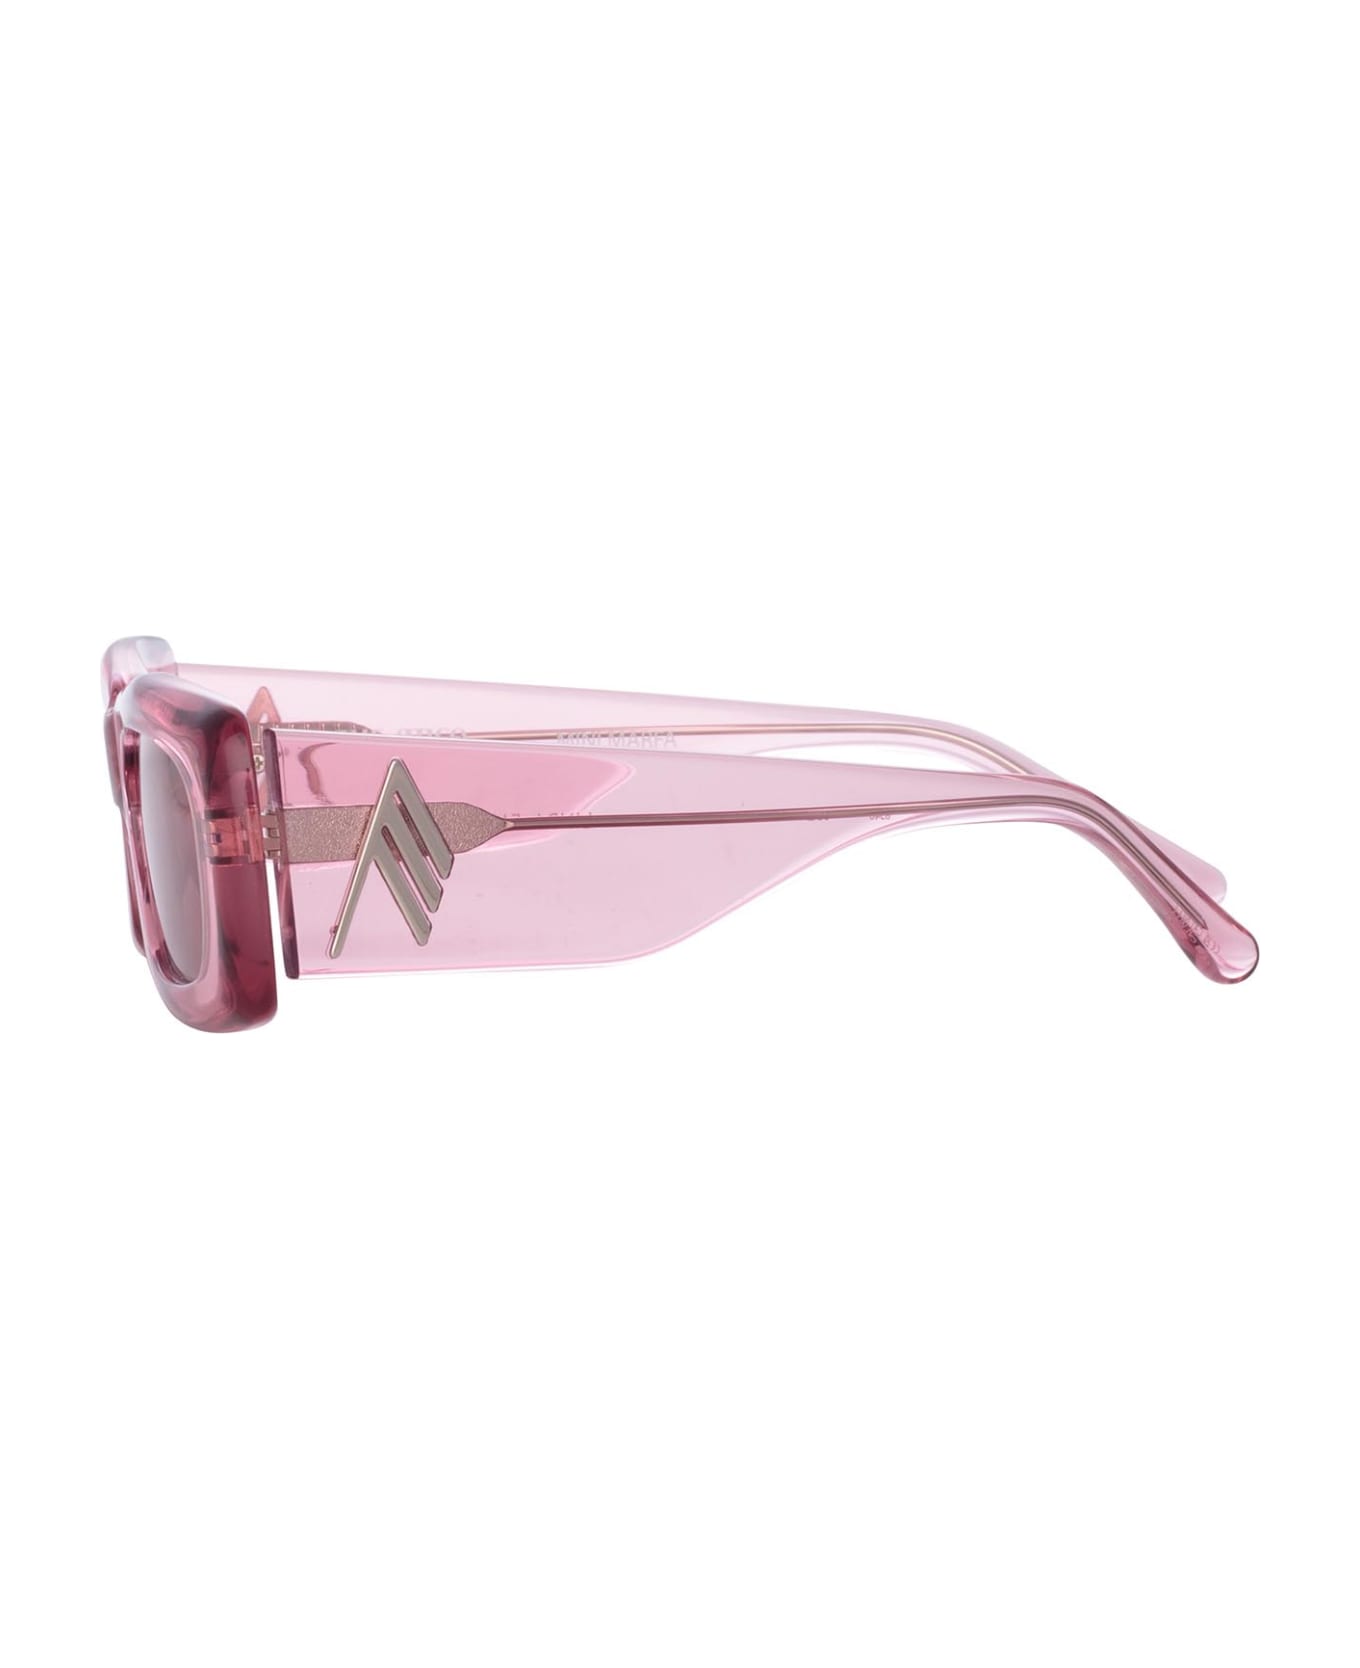 Linda Farrow Attico16 Powder Pink / Silver Sunglasses - Powder Pink / Silver